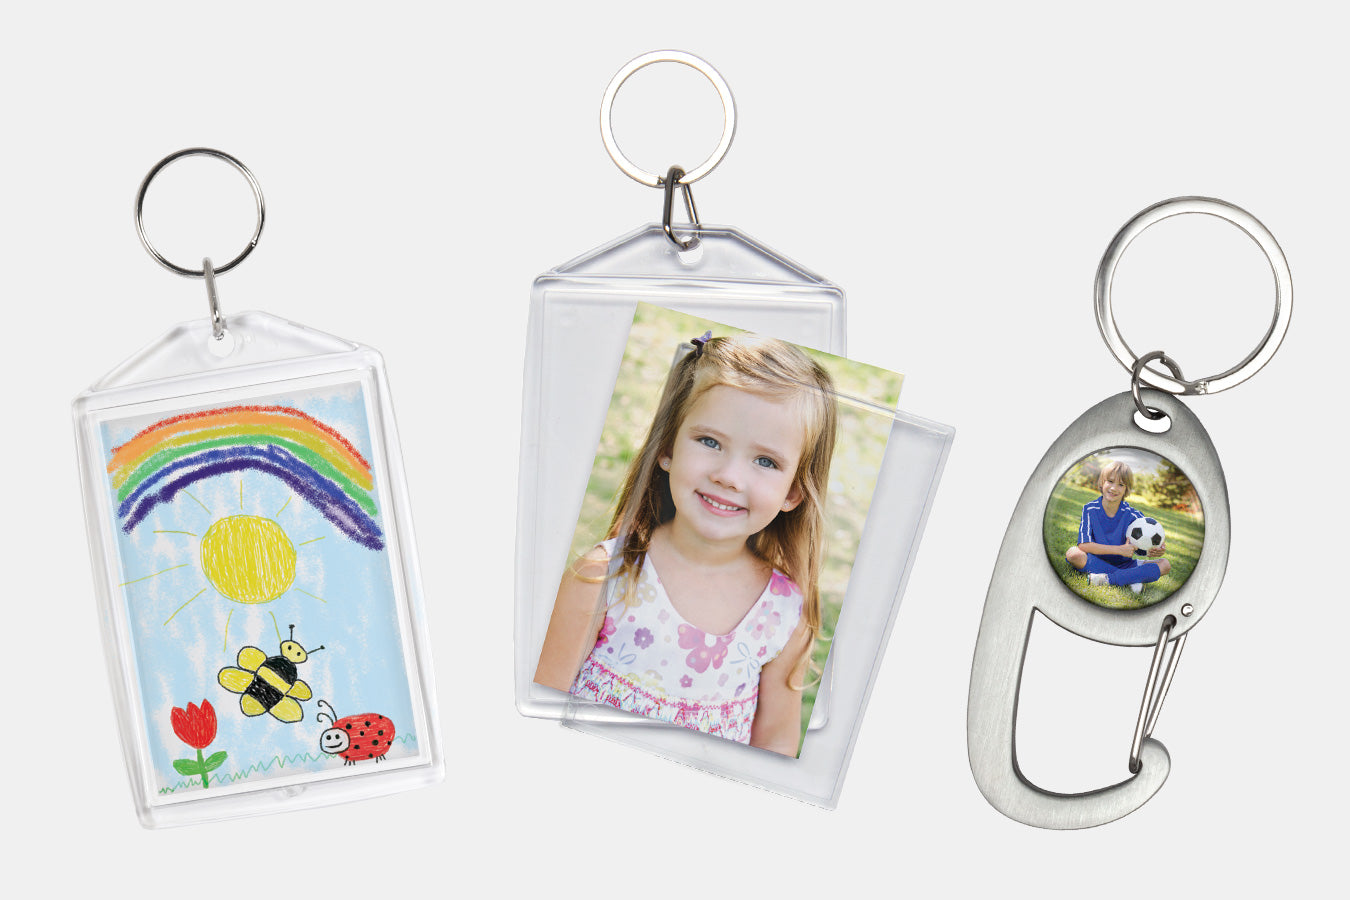 Wholesale Photo Magnets - Self-Adhesive Magnets — Neil Enterprises Inc.